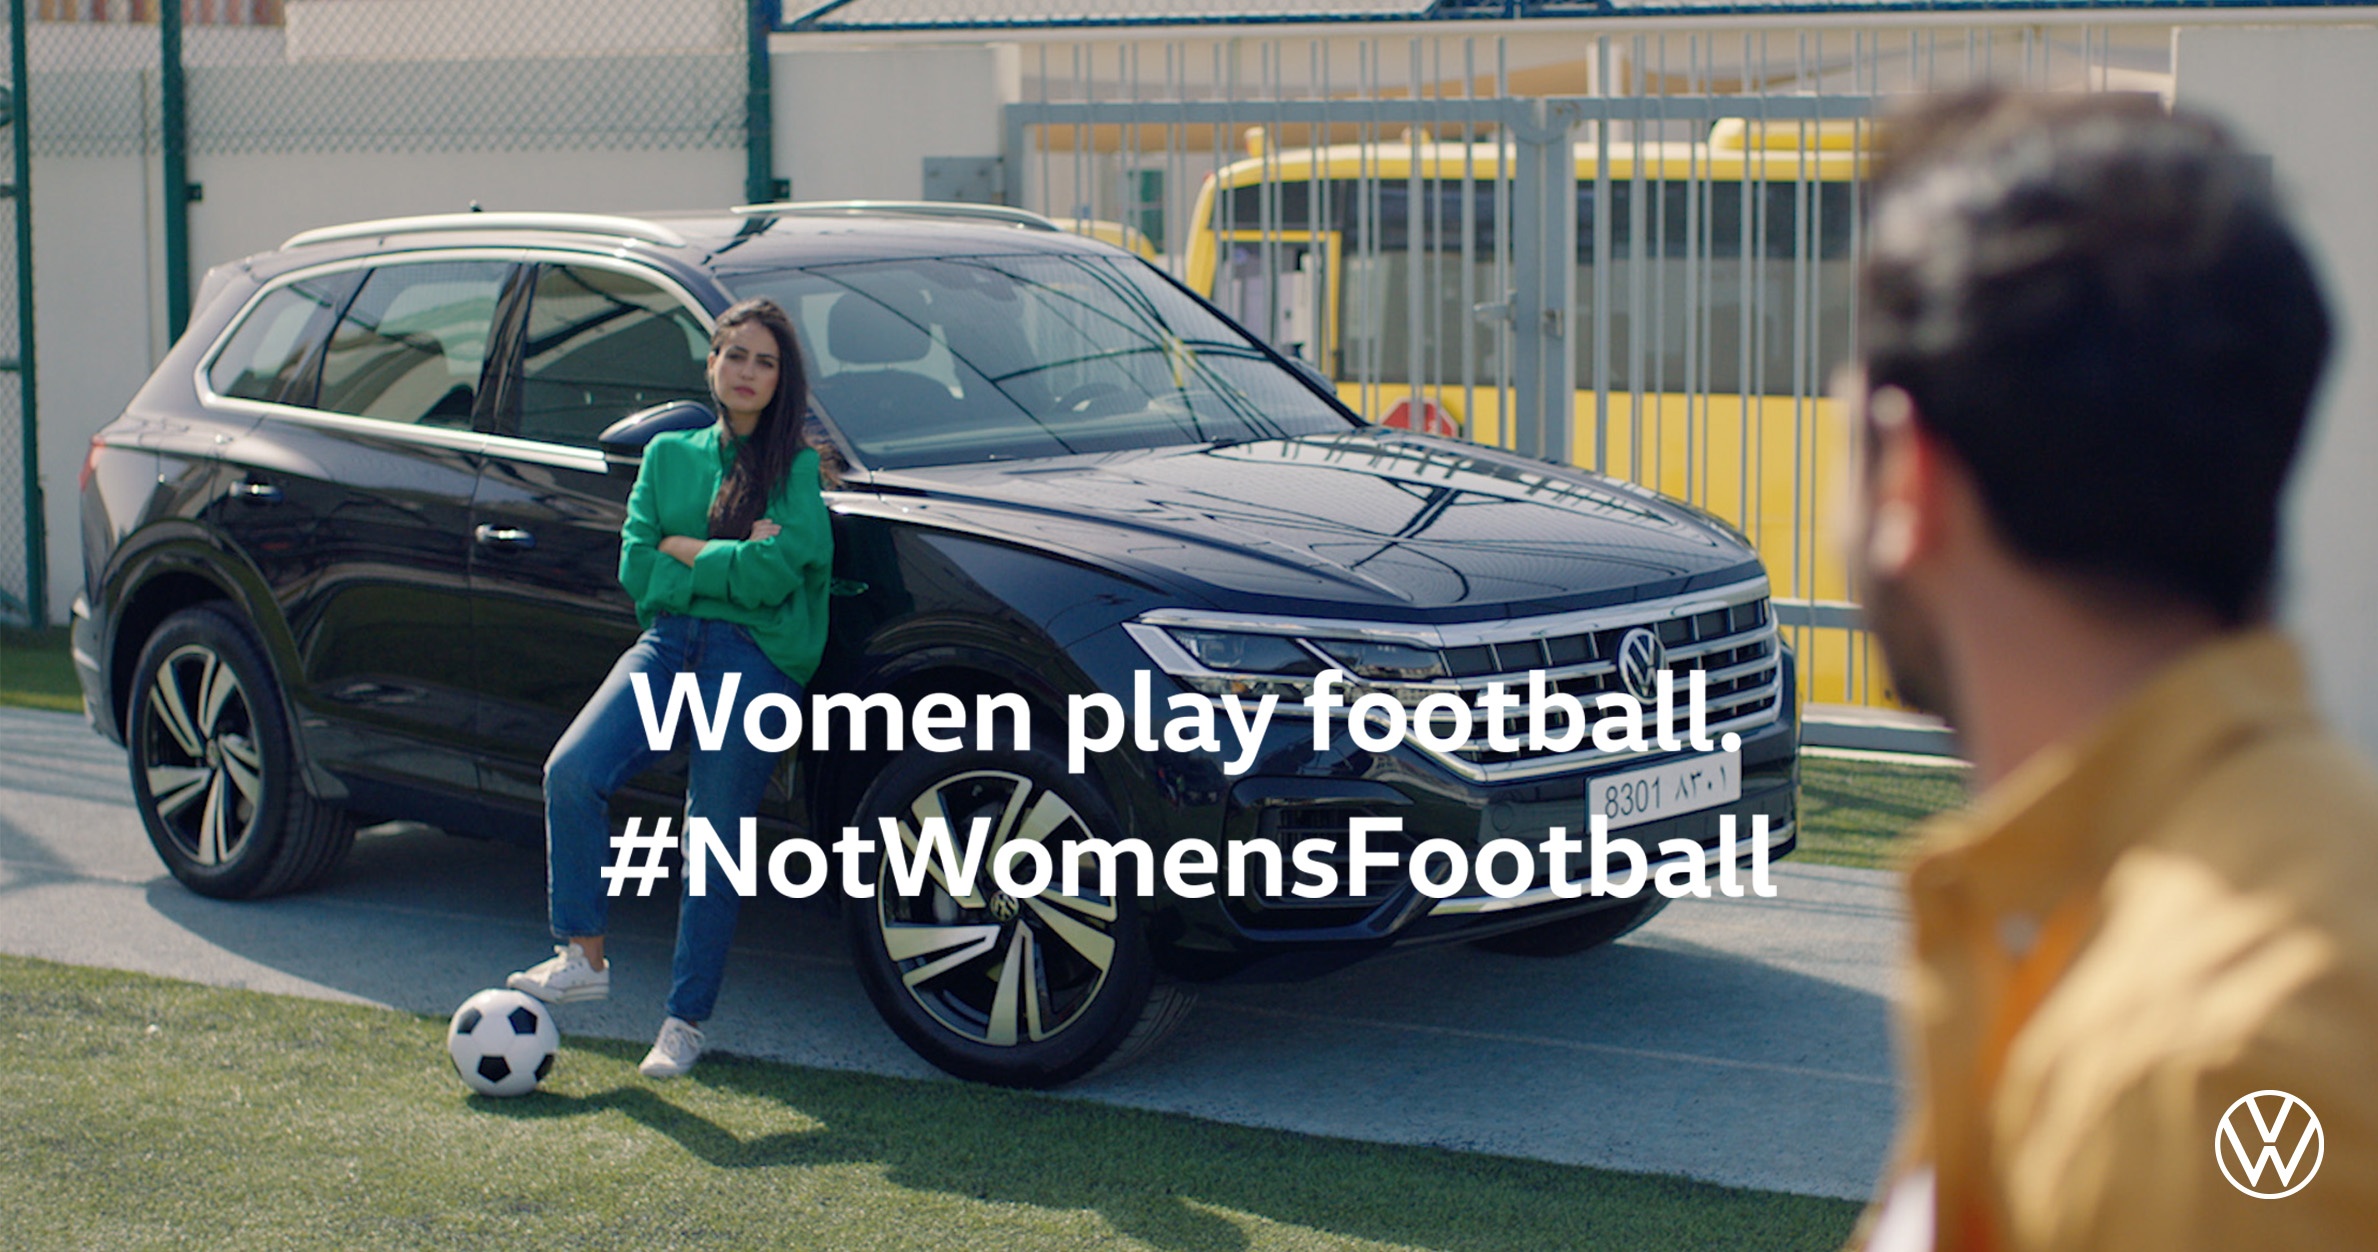 Volkswagen amplifies #NotWomensFootball Campaign ahead of Tournament in Qatar